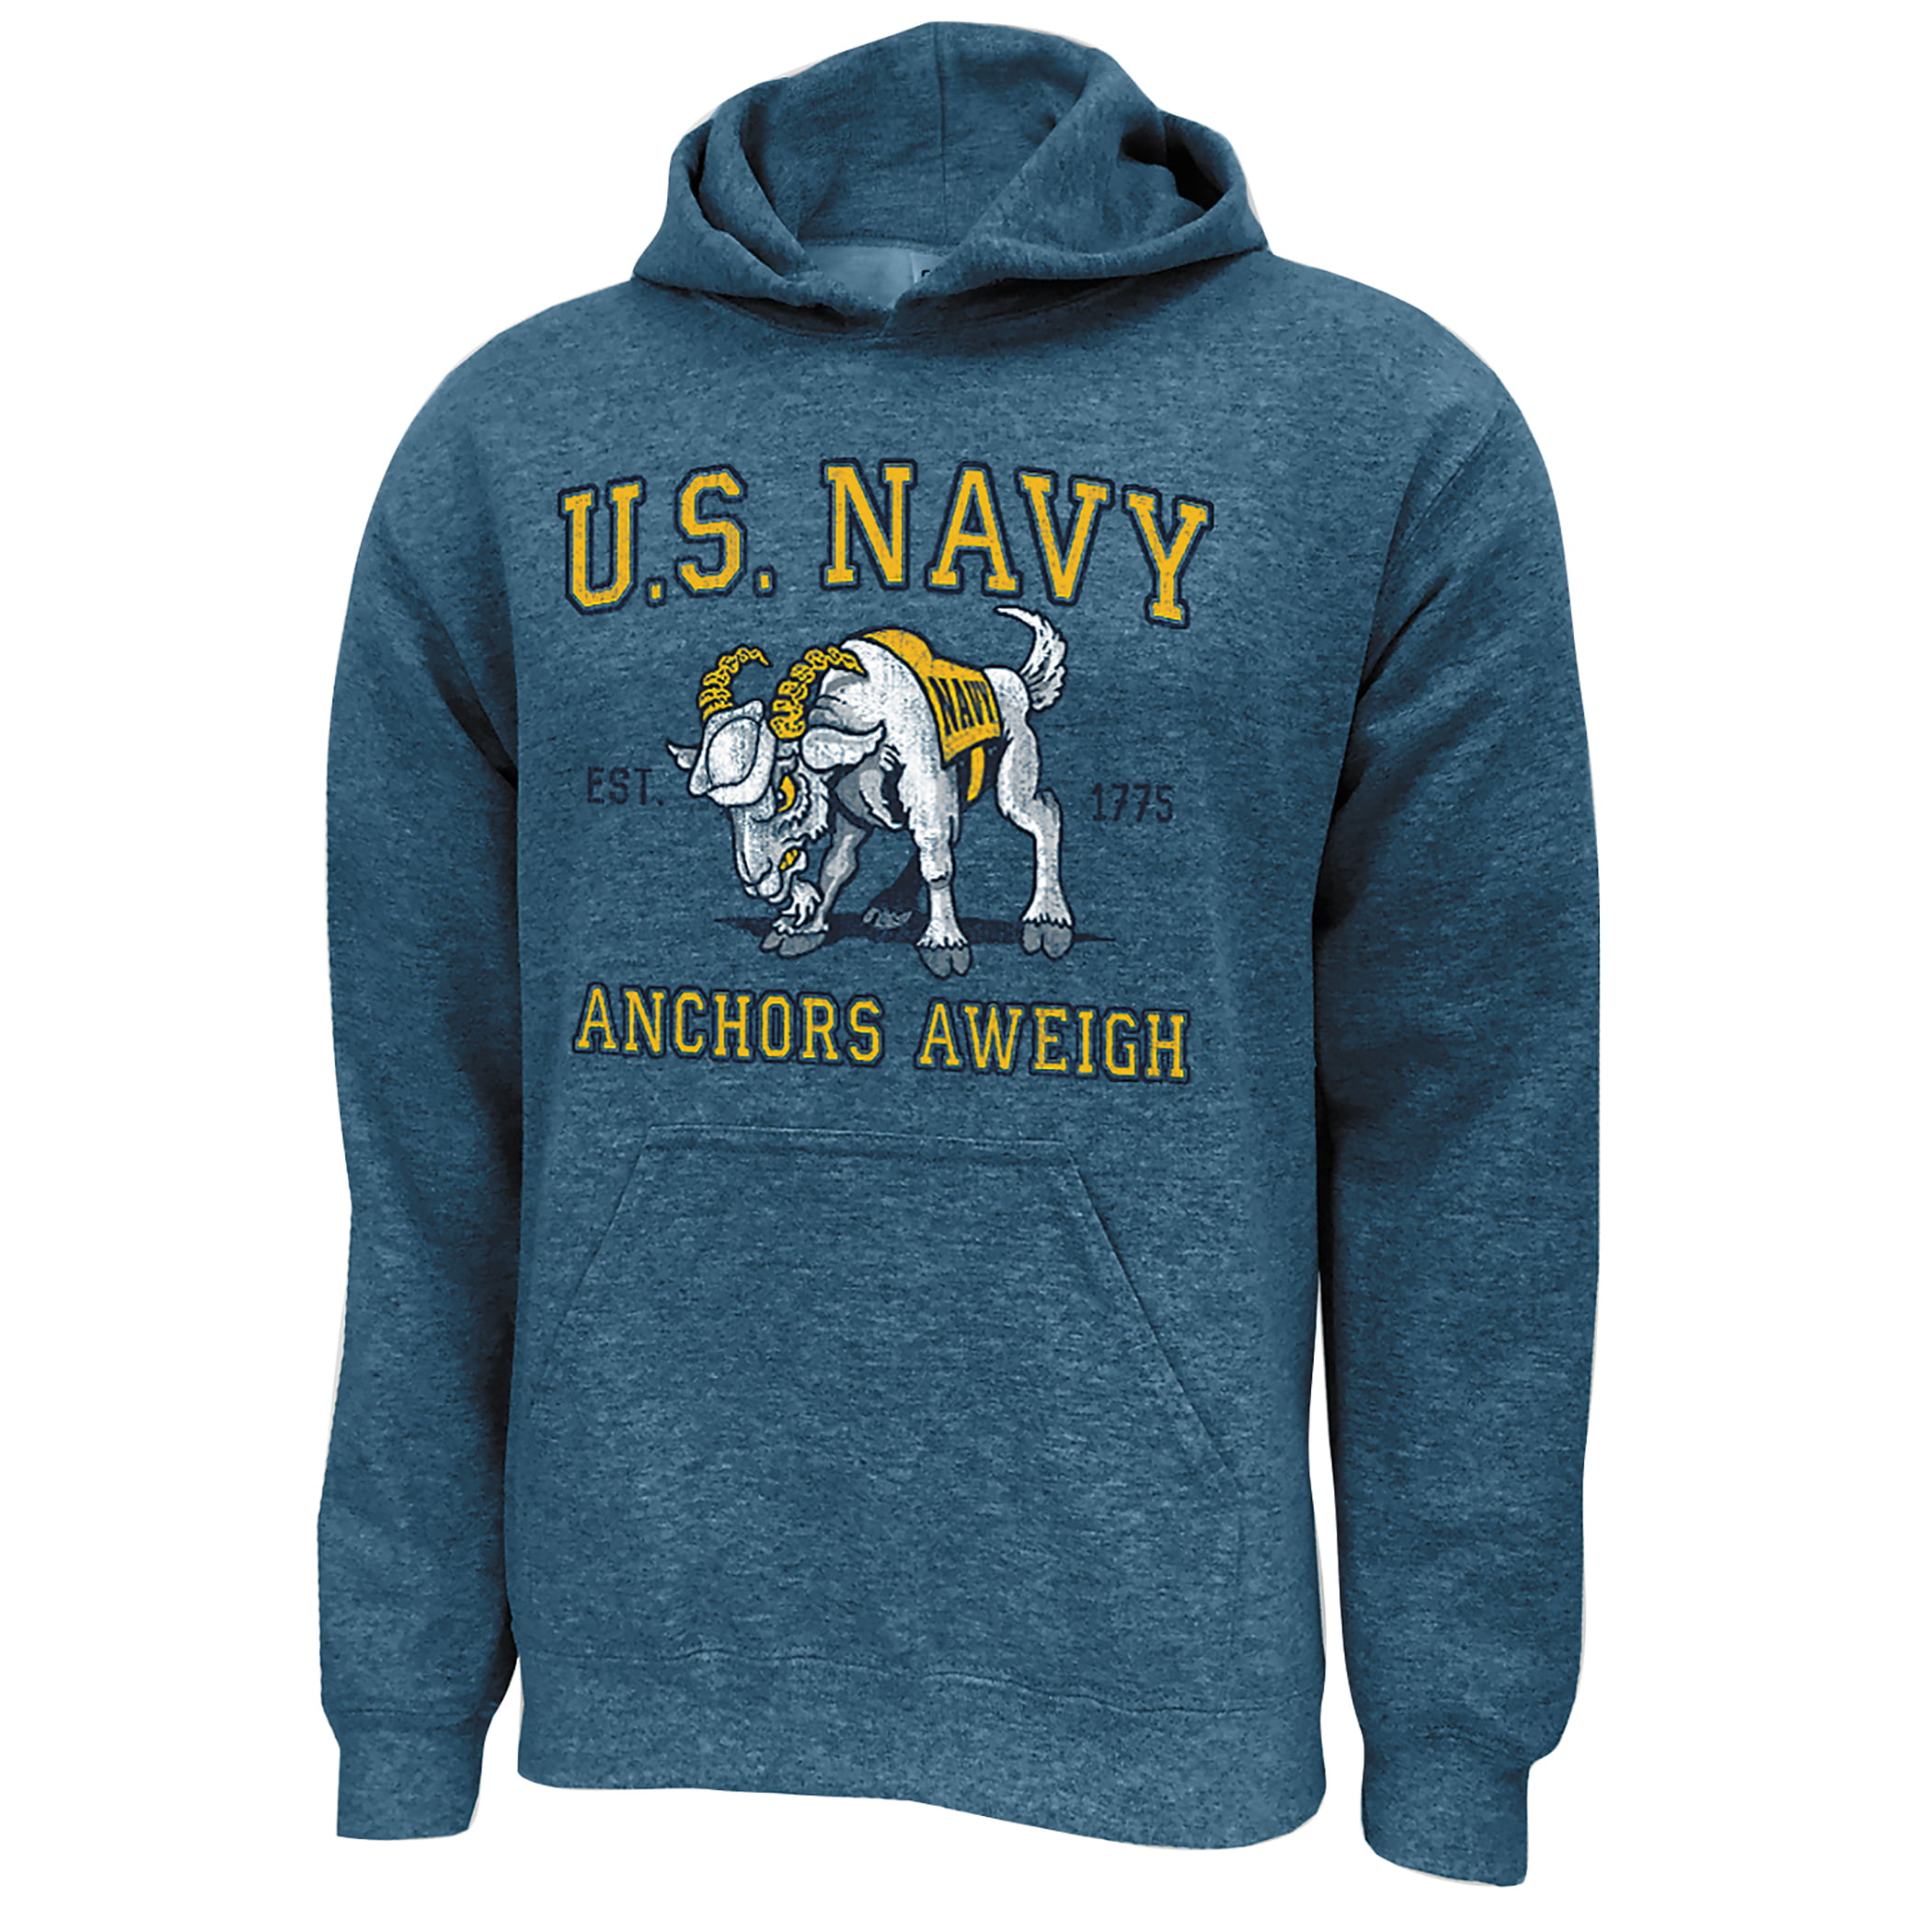 Anchors Aweigh US Navy Military Retro Logo Hoodie Est 1775